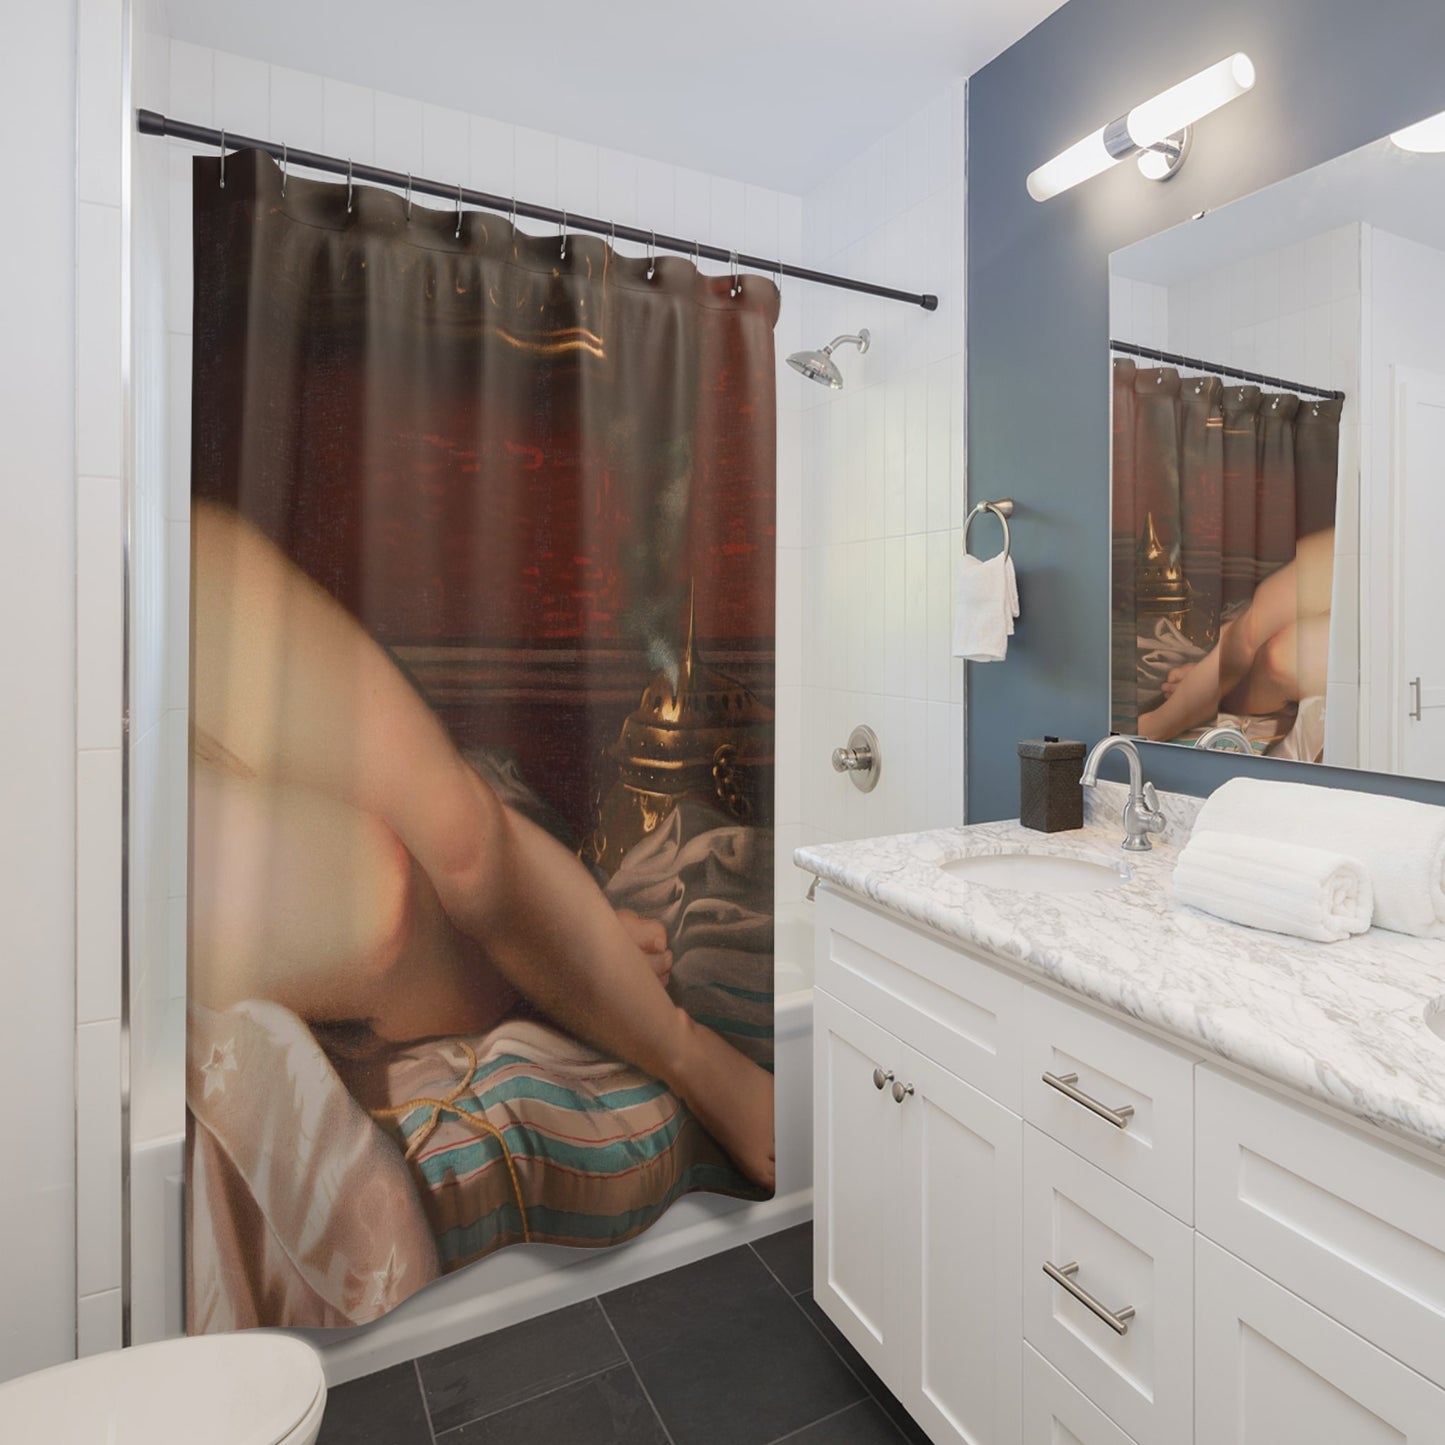 Sensual Female Shower Curtain Best Bathroom Decorating Ideas for Love and Romance Decor